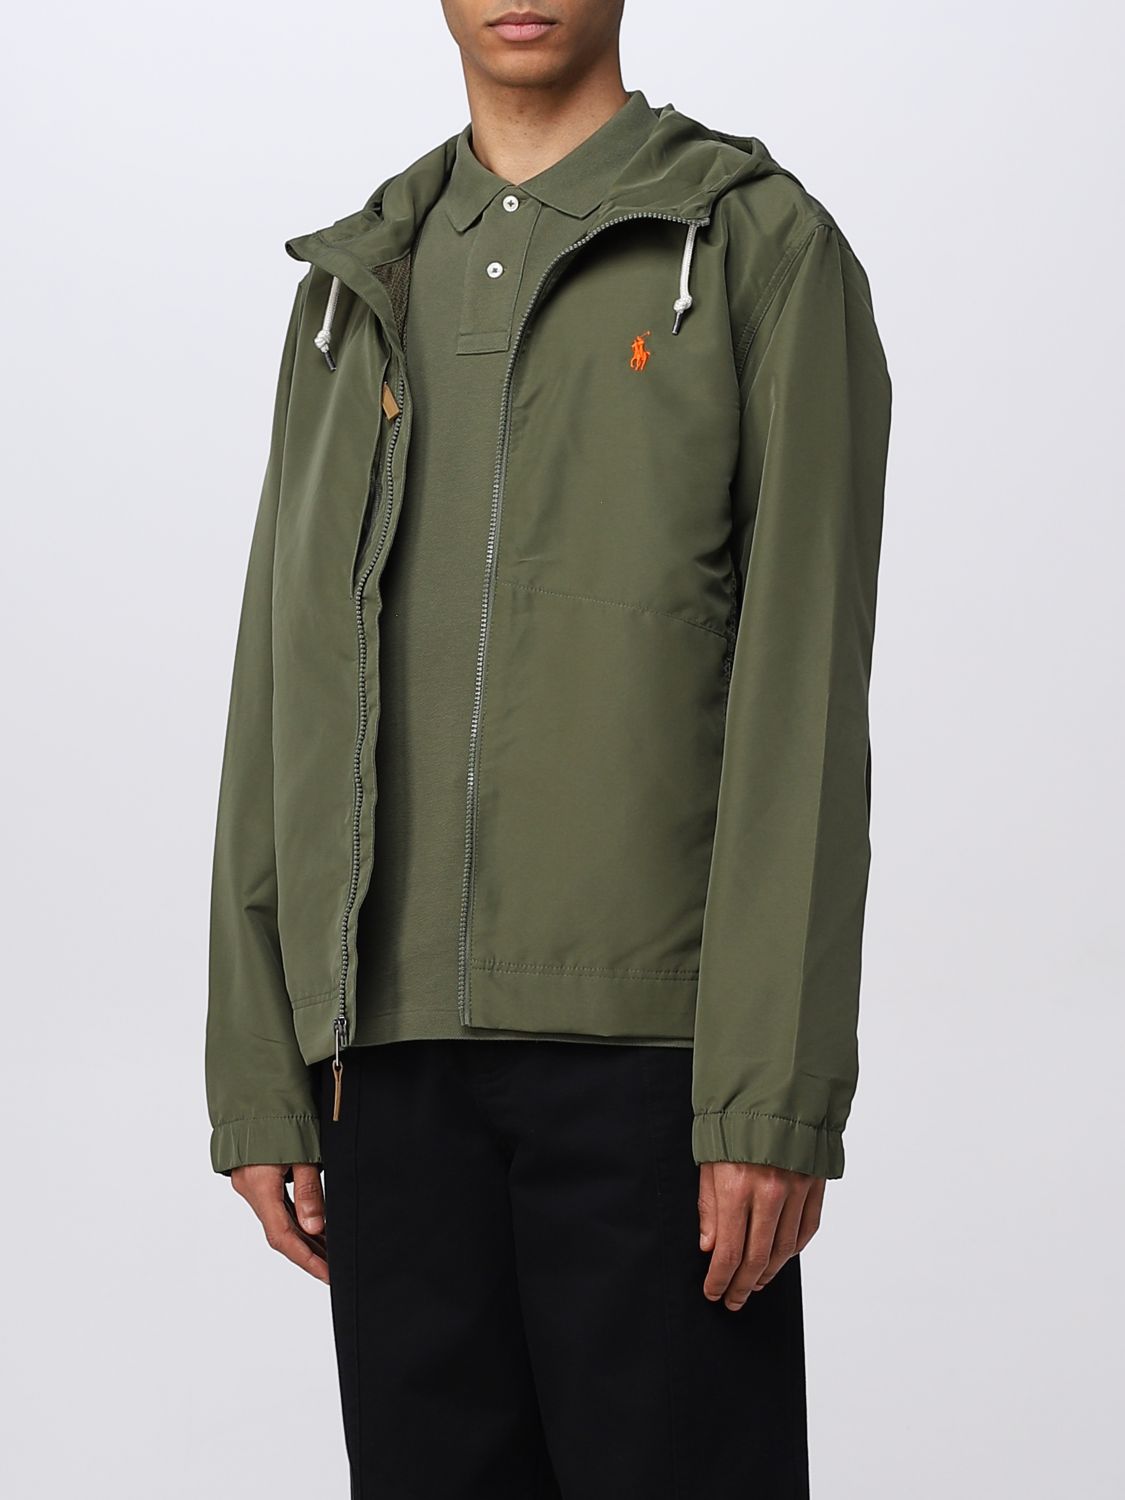 POLO RALPH LAUREN: jacket for man - Green | Polo Ralph Lauren jacket  710888070 online on 